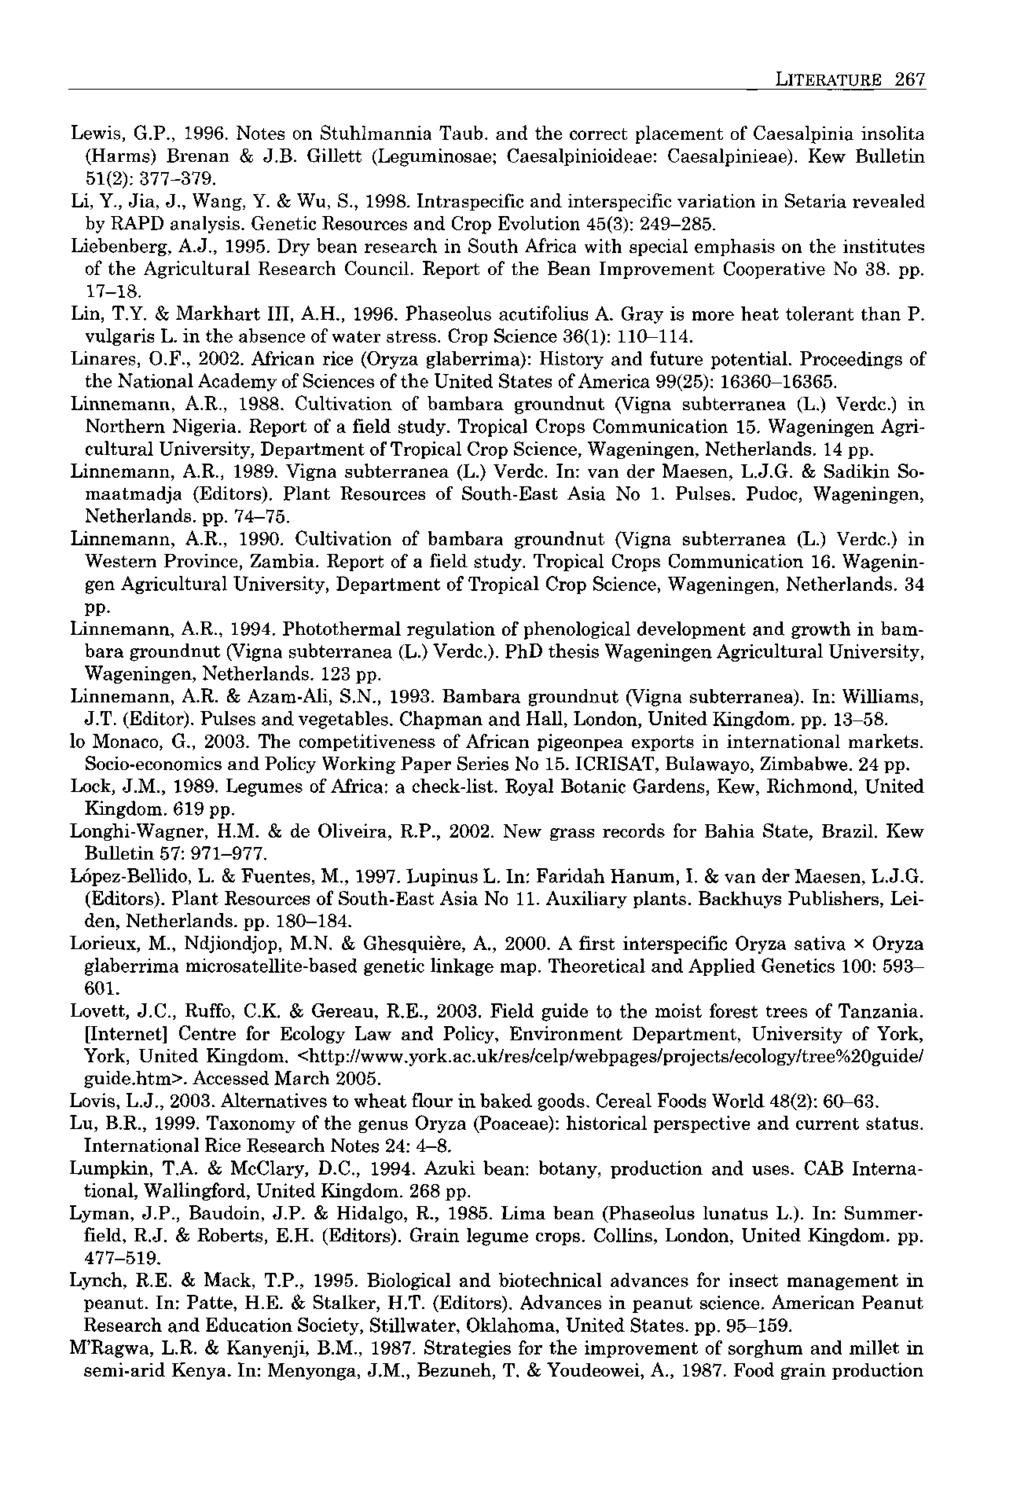 LITERATURE 267 Lewis, G.P., 1996. Notes on Stuhlmannia Taub, and the correct placement of Caesalpinia insolita (Harms) Brenan & J.B. Gillett (Leguminosae; Caesalpinioideae: Caesalpinieae).